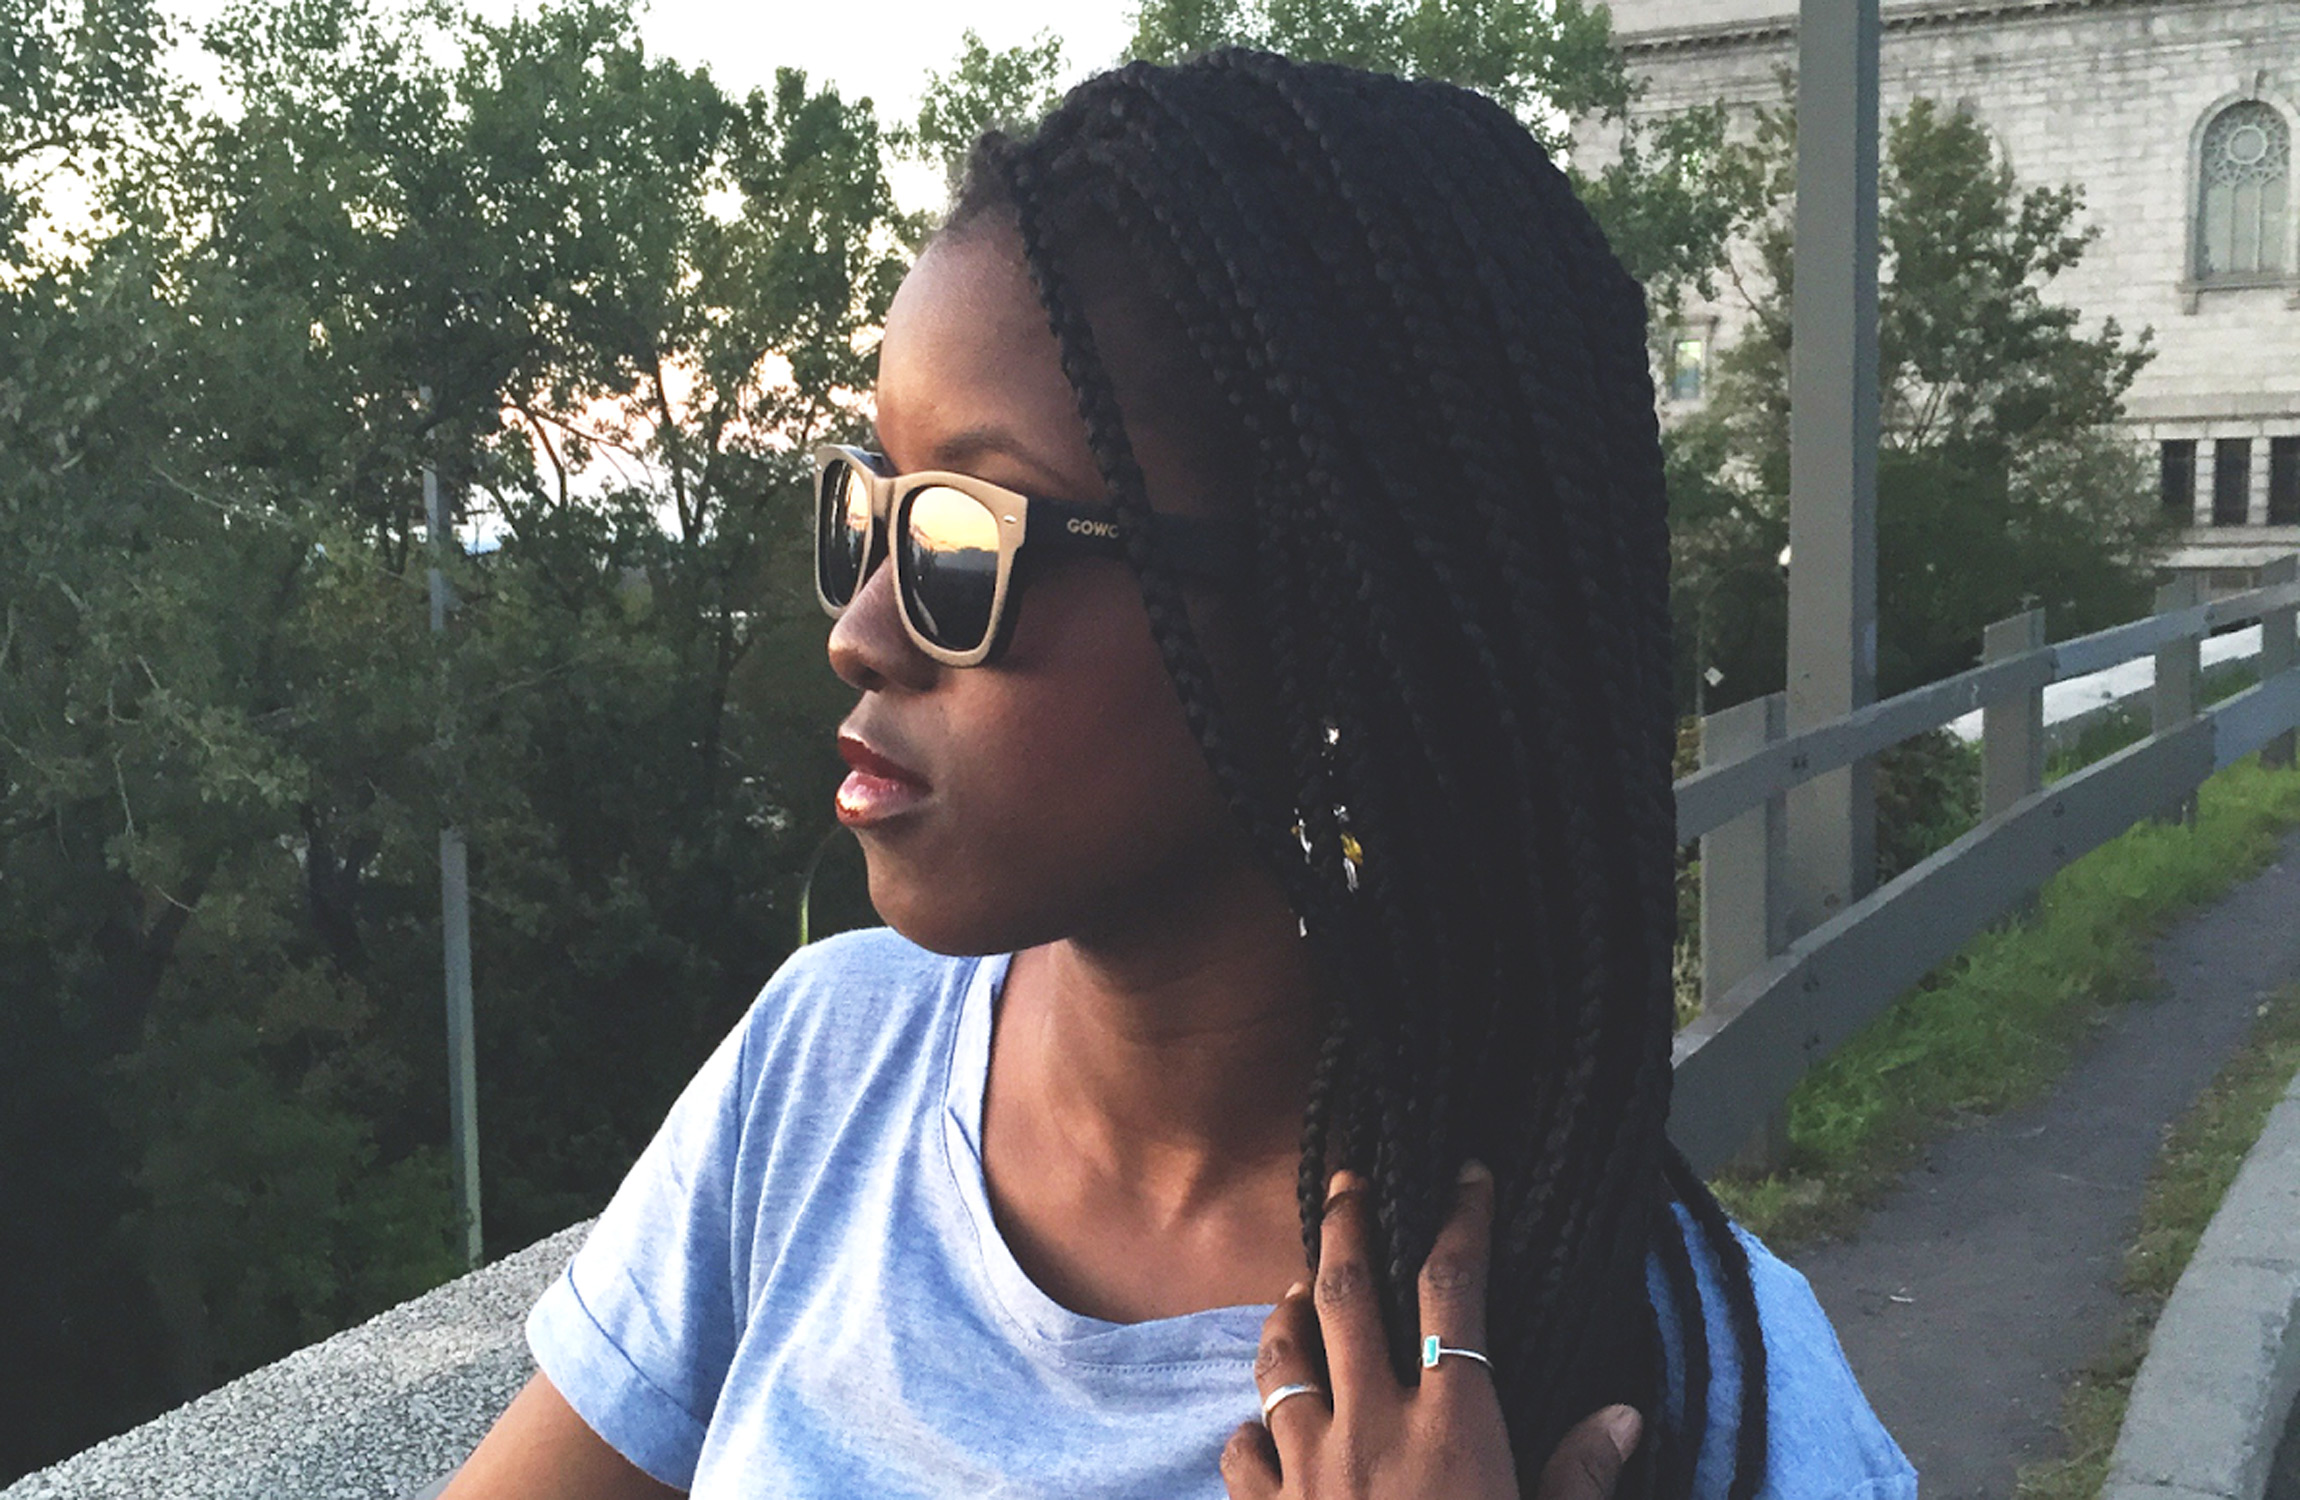 wayfarer style sunglasses black girl 2